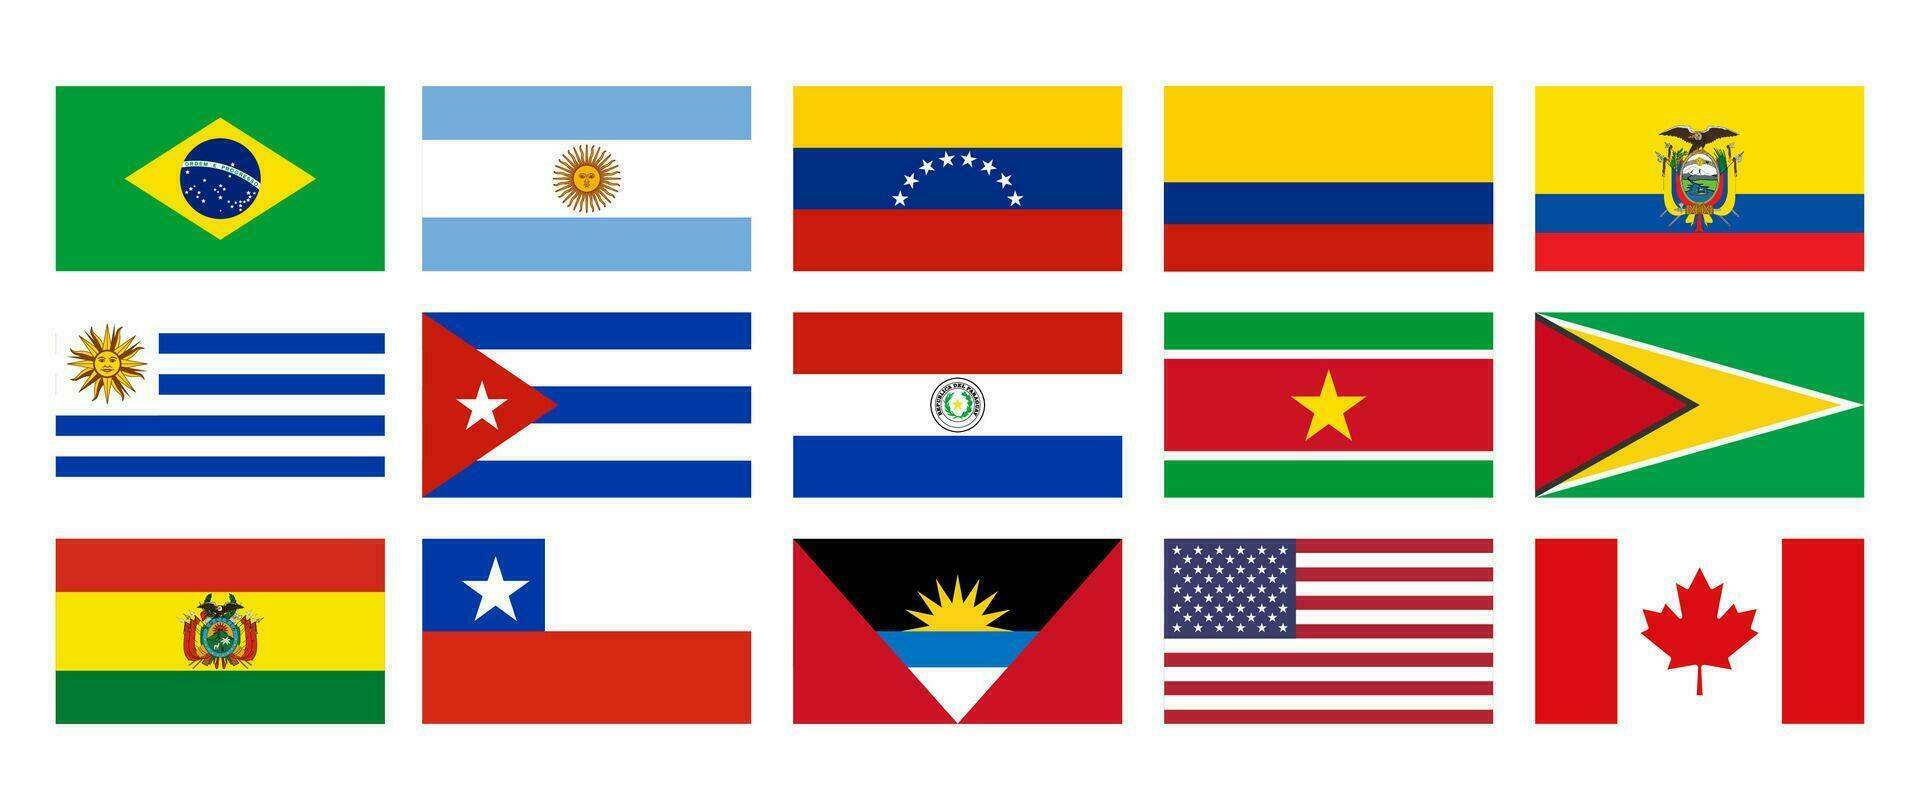 nacional bandeiras do a américas, brasil, Argentina, Colômbia, Equador, Venezuela, Uruguai, Cuba, Paraguai, suriname, Guiana, Bolívia, Chile, Antígua e barbuda, Unidos estados, Canadá vetor